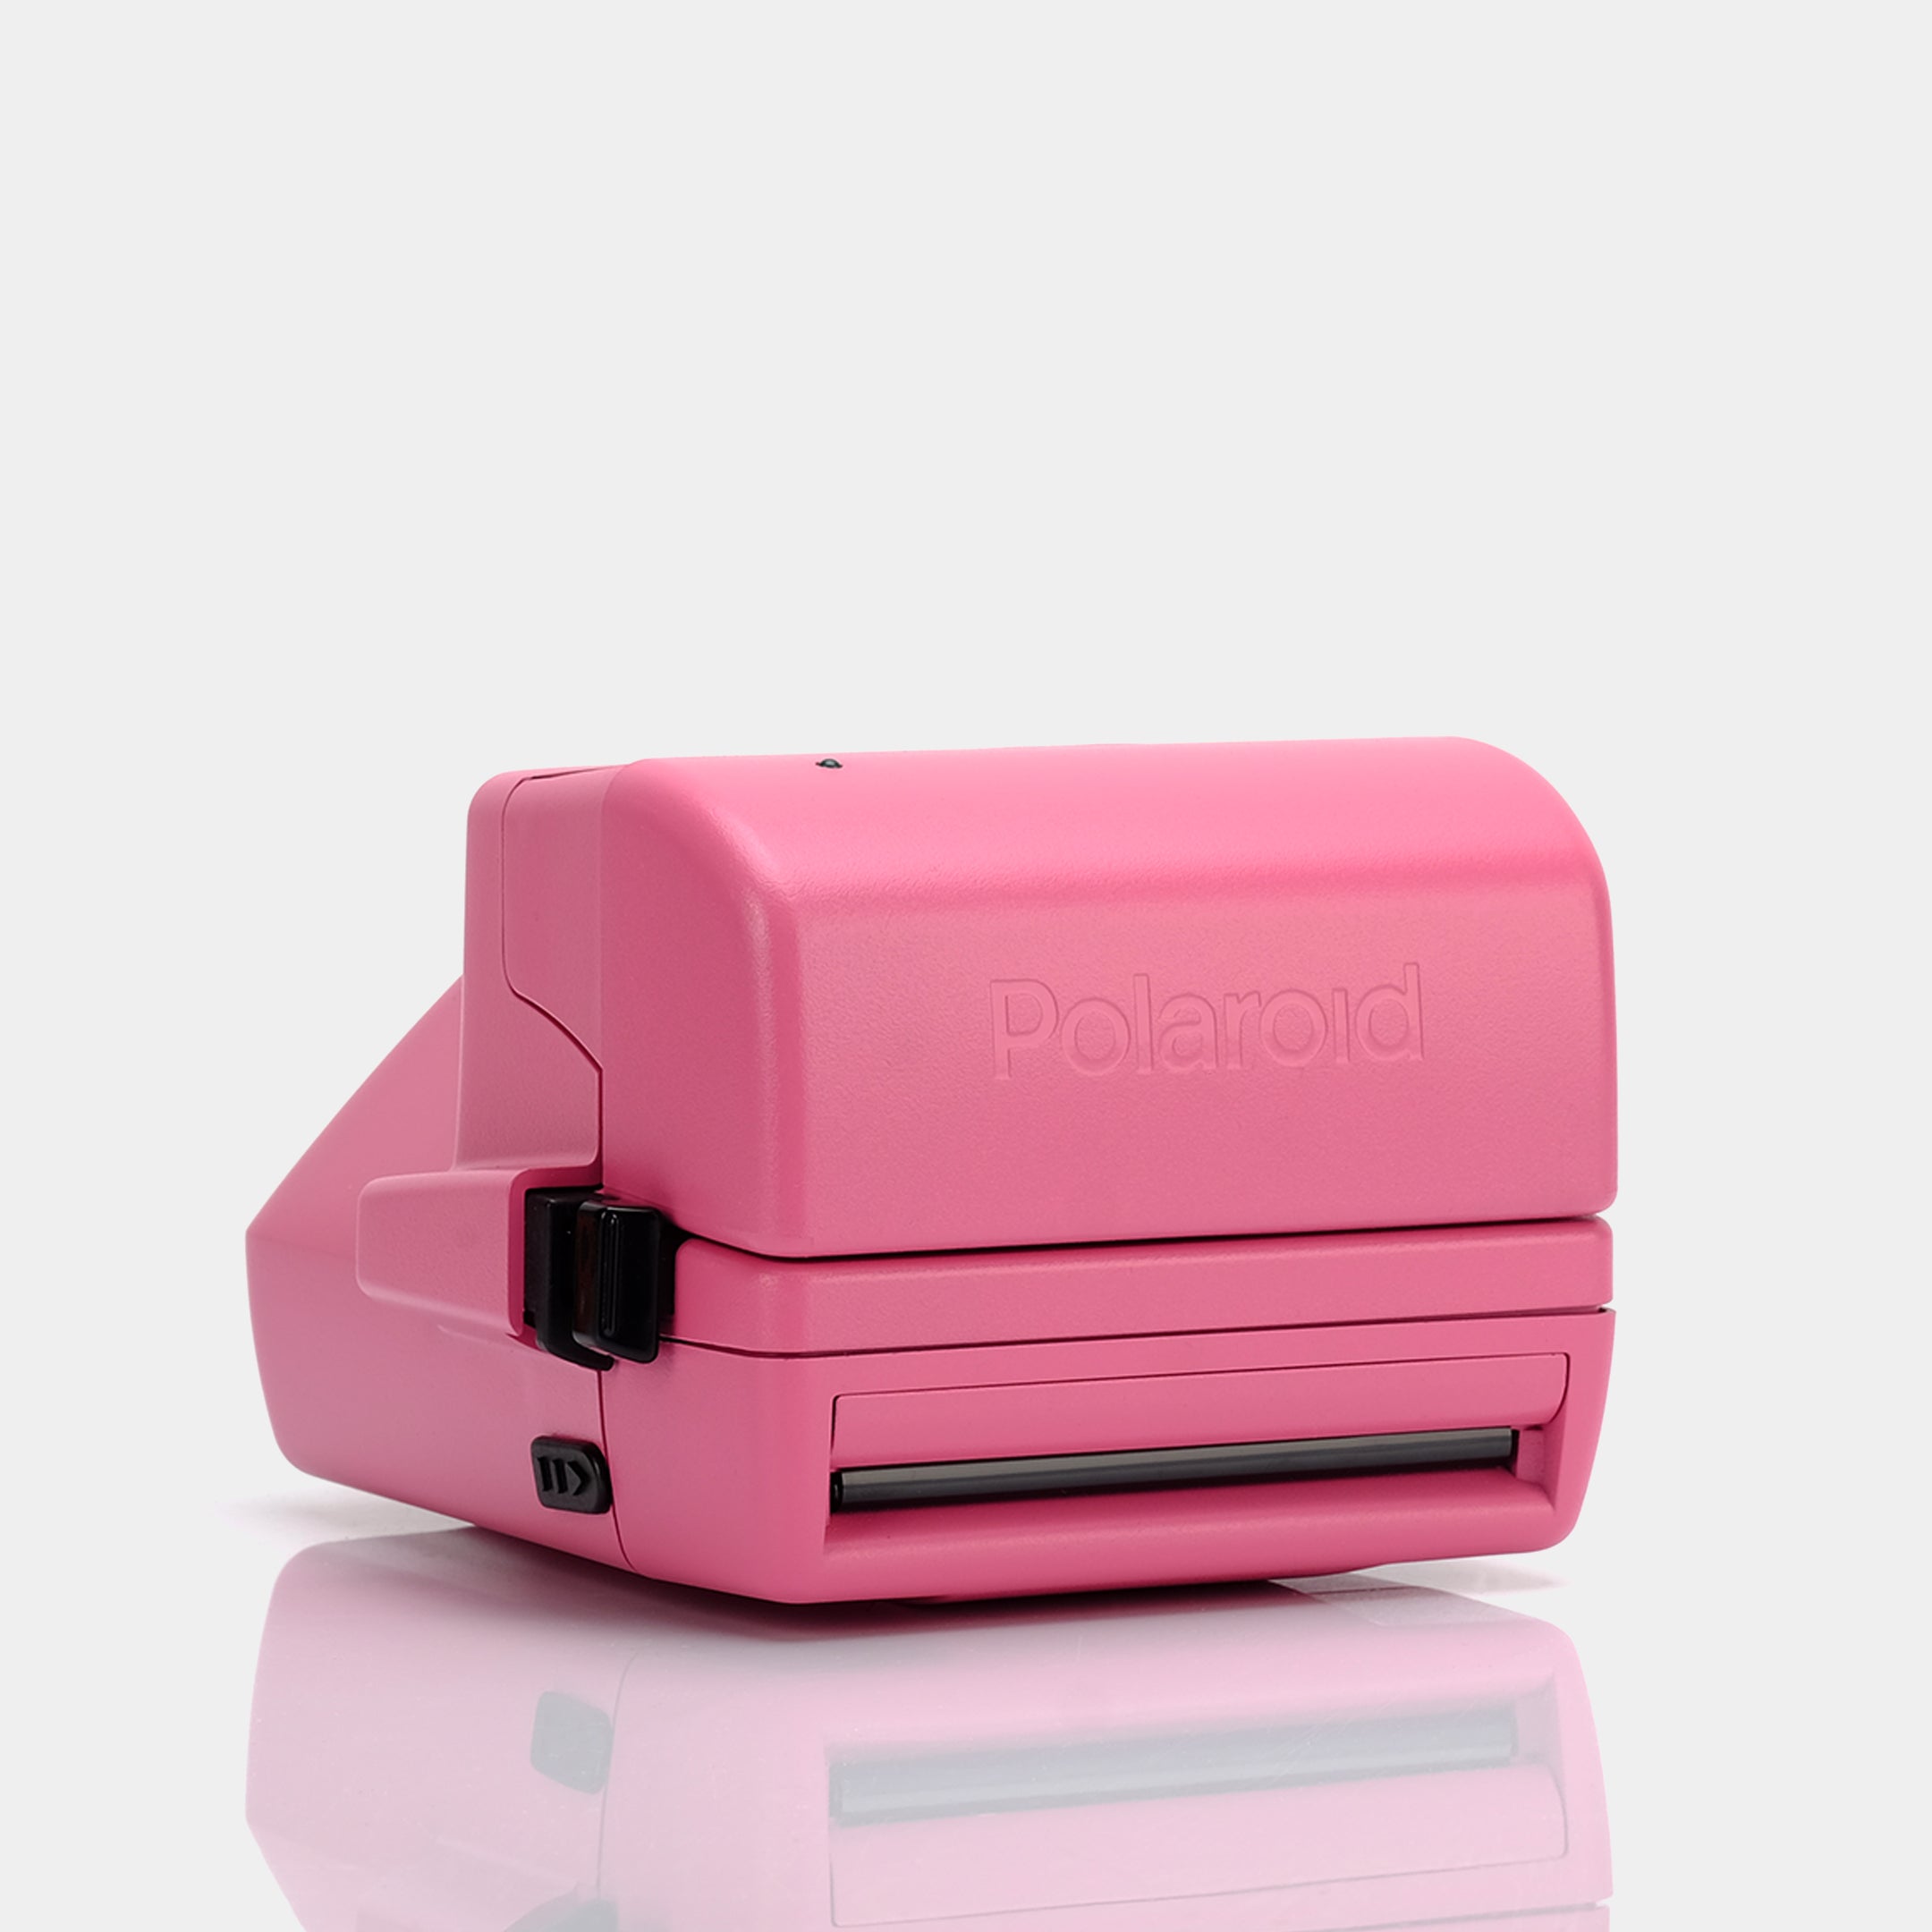 Polaroid 600 One Step Close Up Bubblegum Pink Instant Film Camera